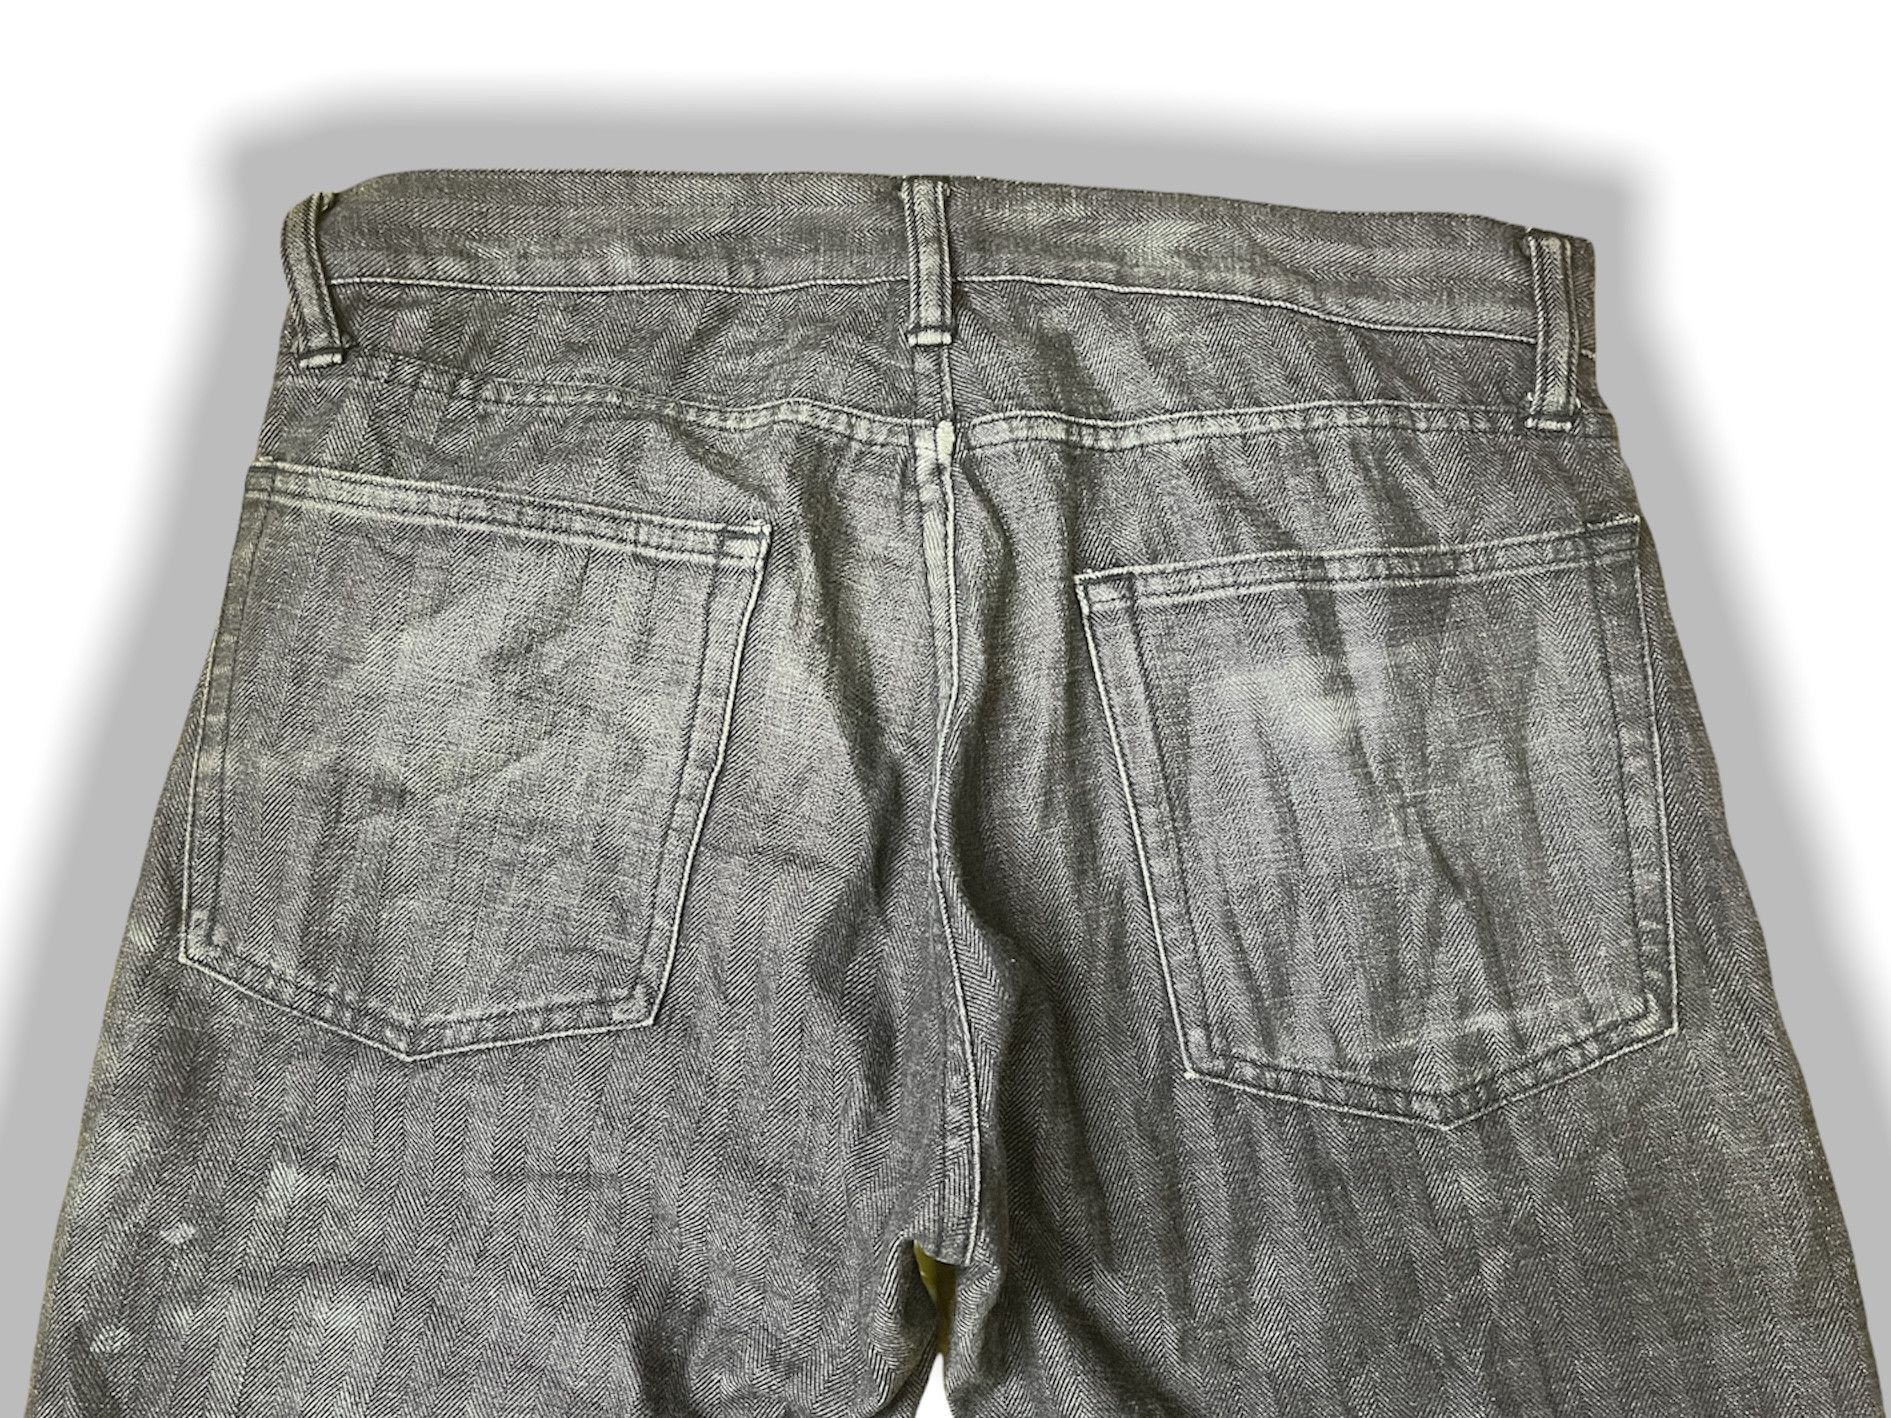 Japanese Brand - Distressed EDGE RUPERT Flare Denim Jeans HISTERIC STYLE - 10